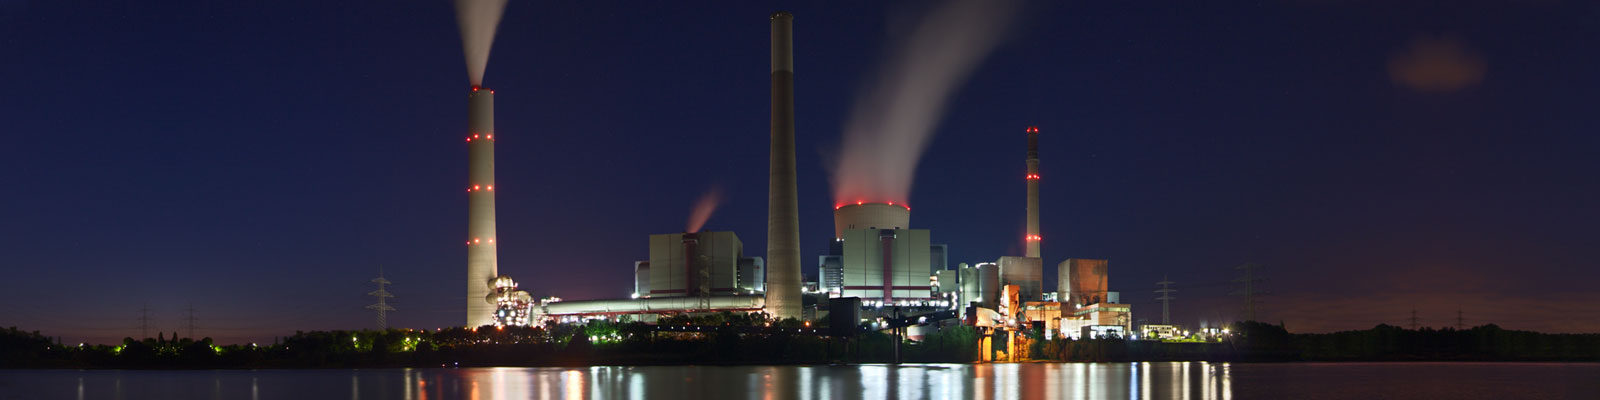 power generation facility